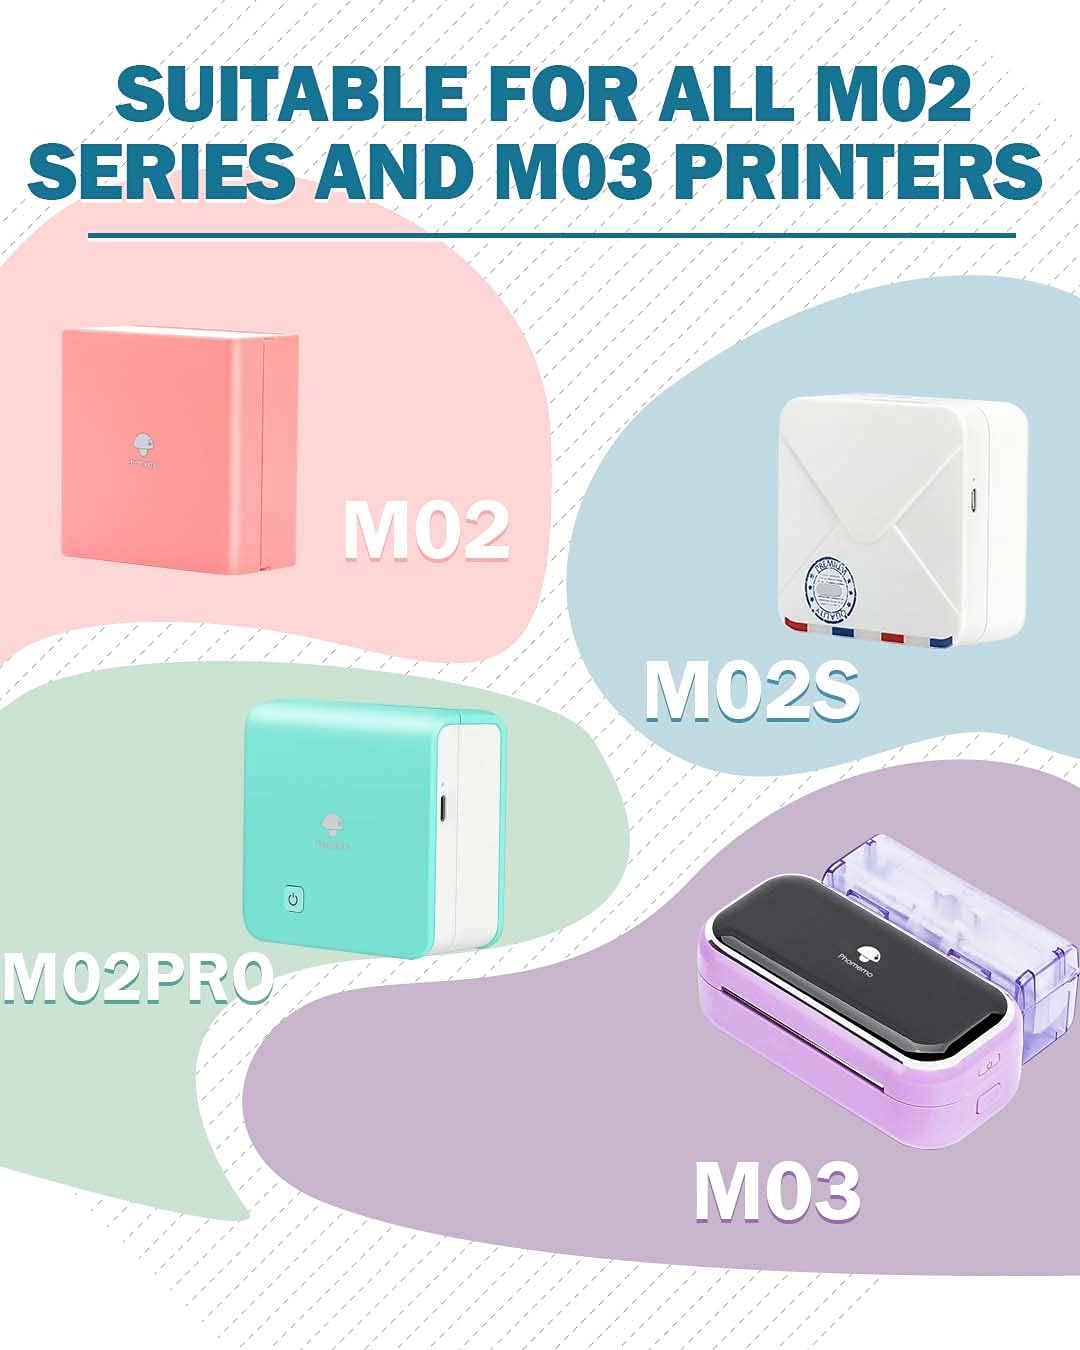 Colorful Thermal Paper 53mm x 6.5m for Phomemo M02/M03 Pocket Printer